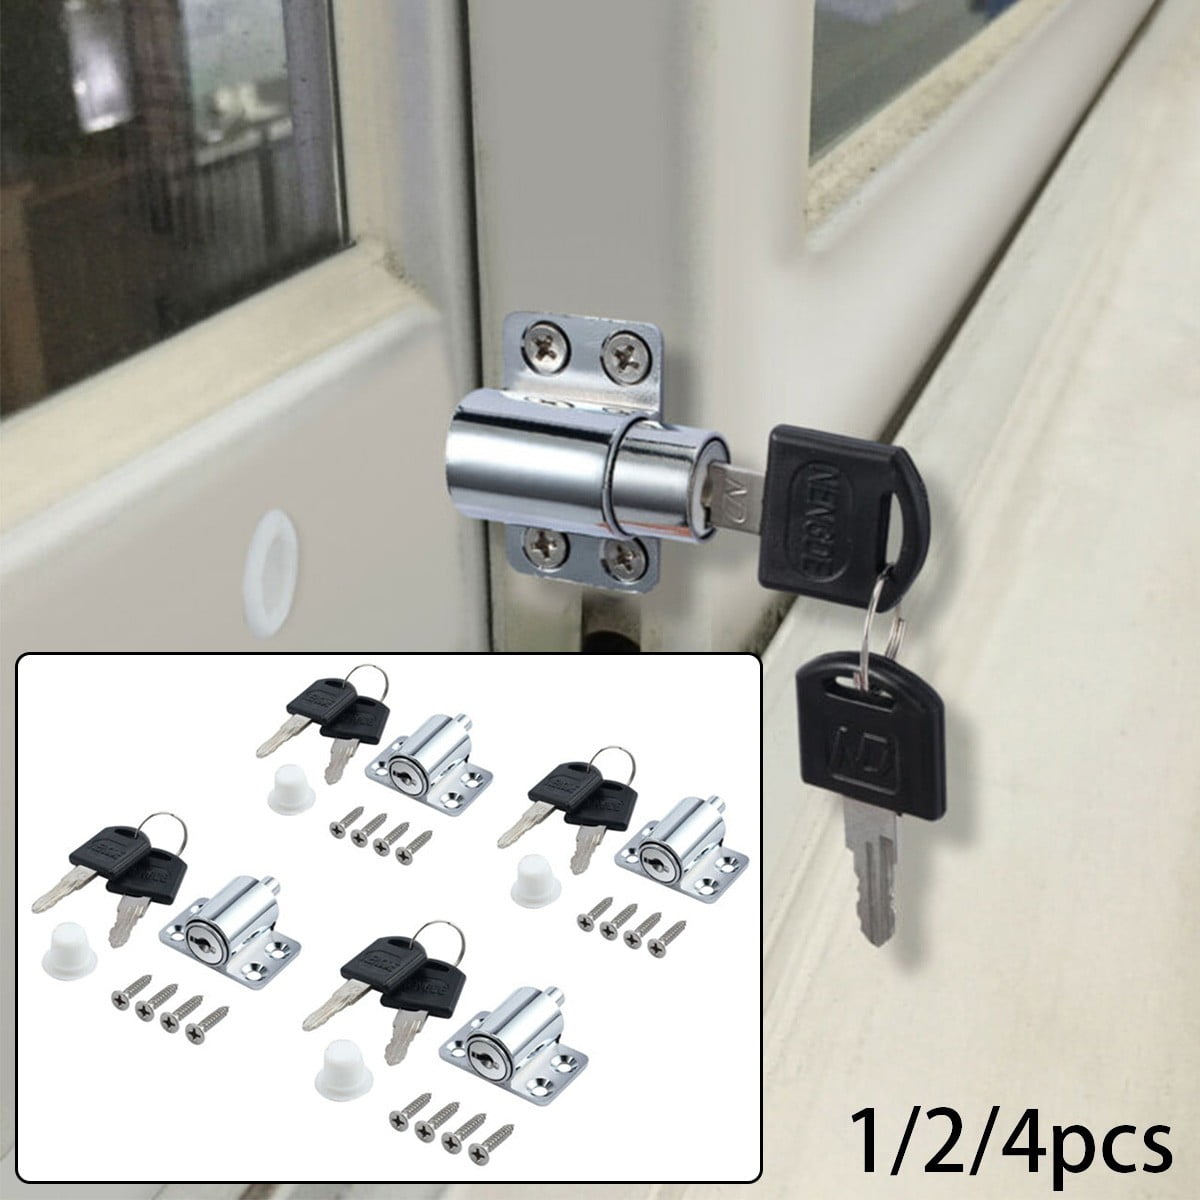 Details about   10 Sets Door Window Bolt Catch Push Lock Sliding Patio Sash Safety Security Key 